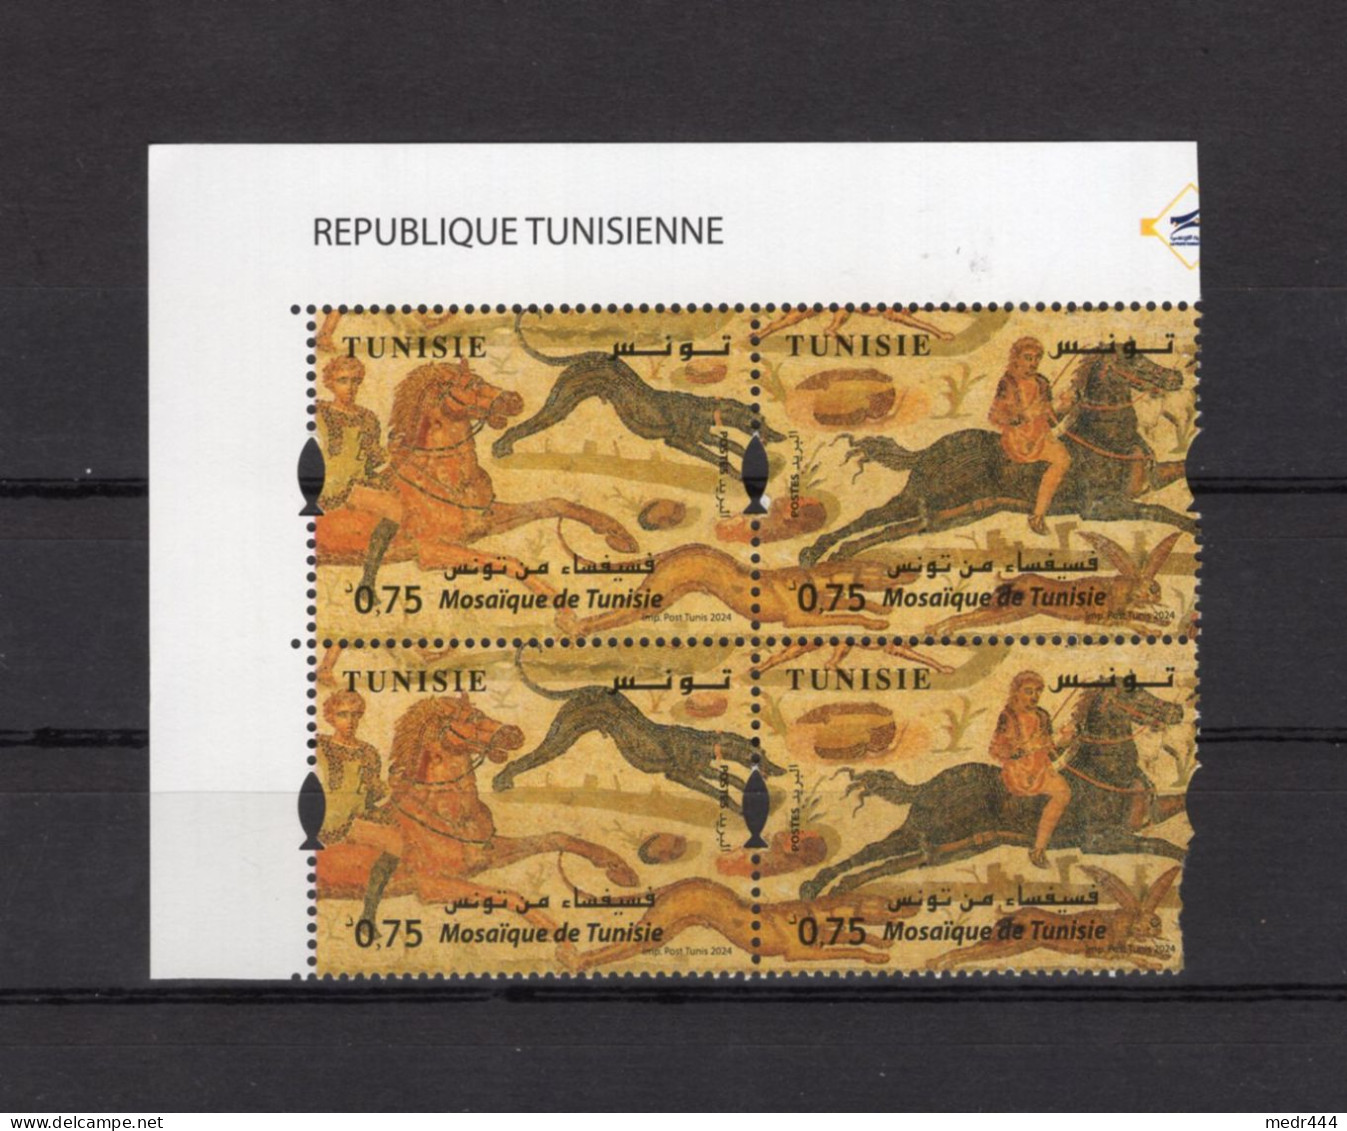 Tunisia/Tunisie 2024 - Mosaics From Tunisia/Mosaïque De Tunisie - Hunting Scene - 2 Strips Of 2 Stamps  - Superb*** - Tunisia (1956-...)